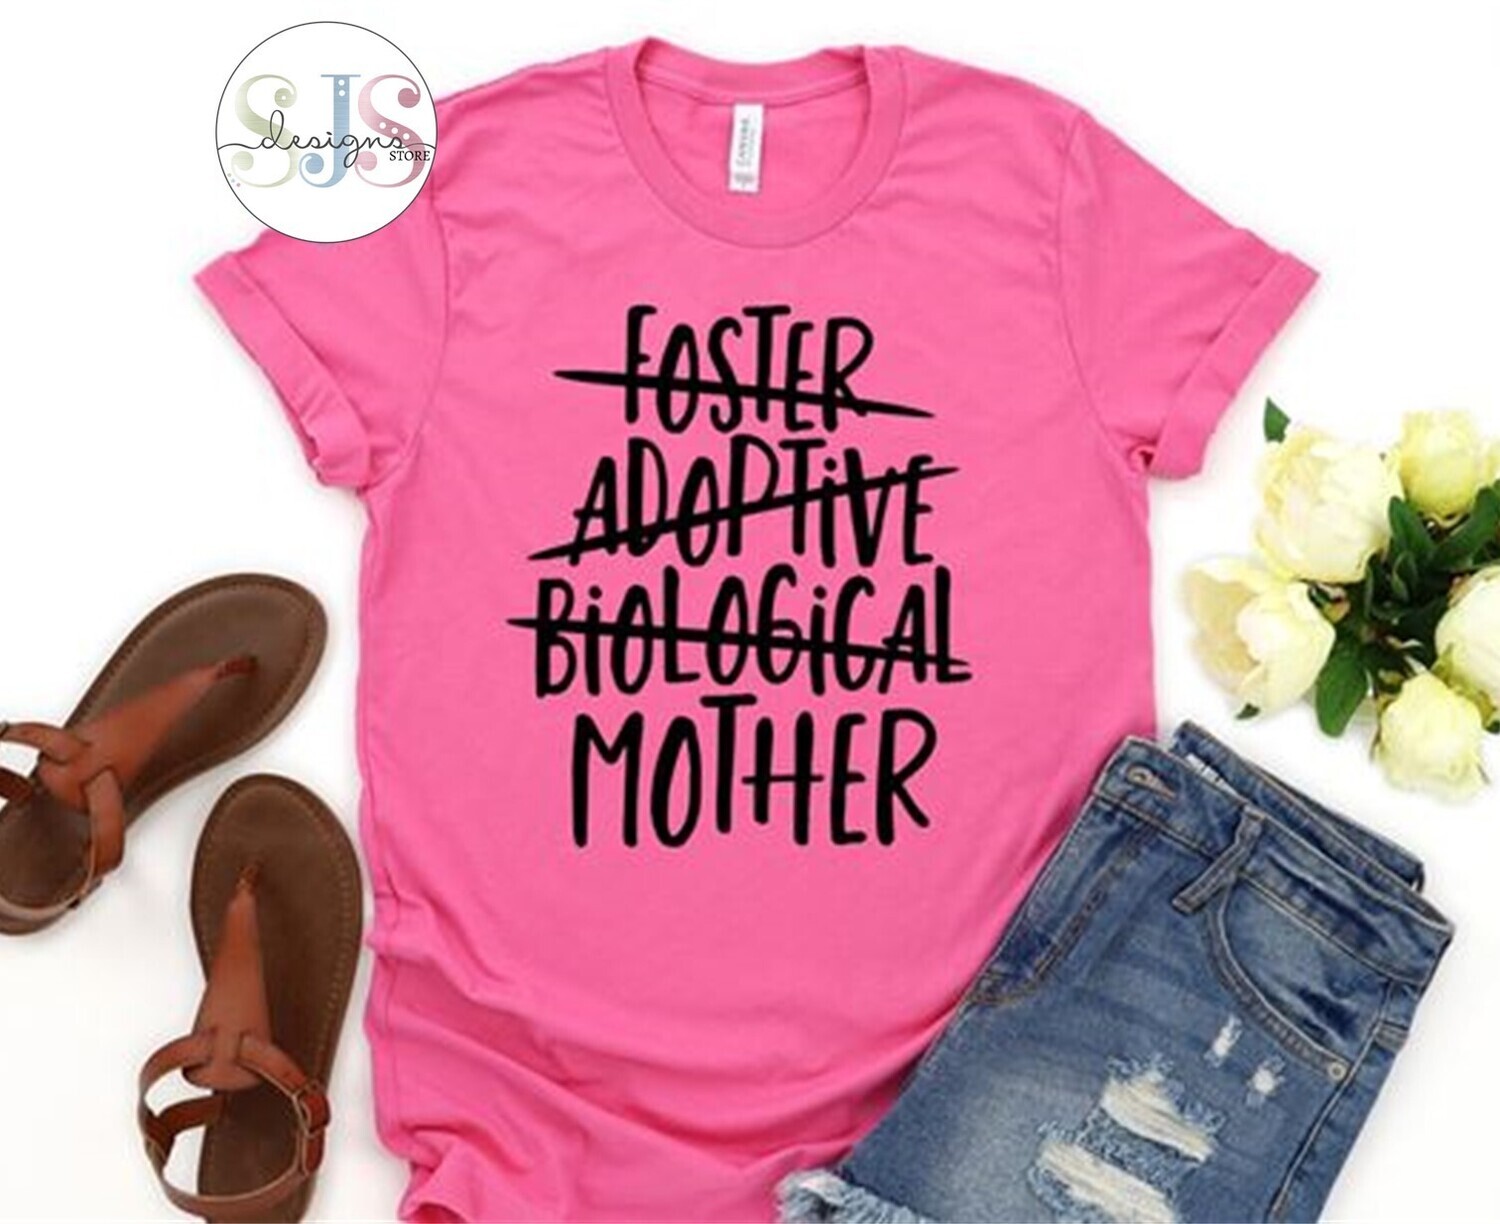 Foster Adoptive Biological Mother